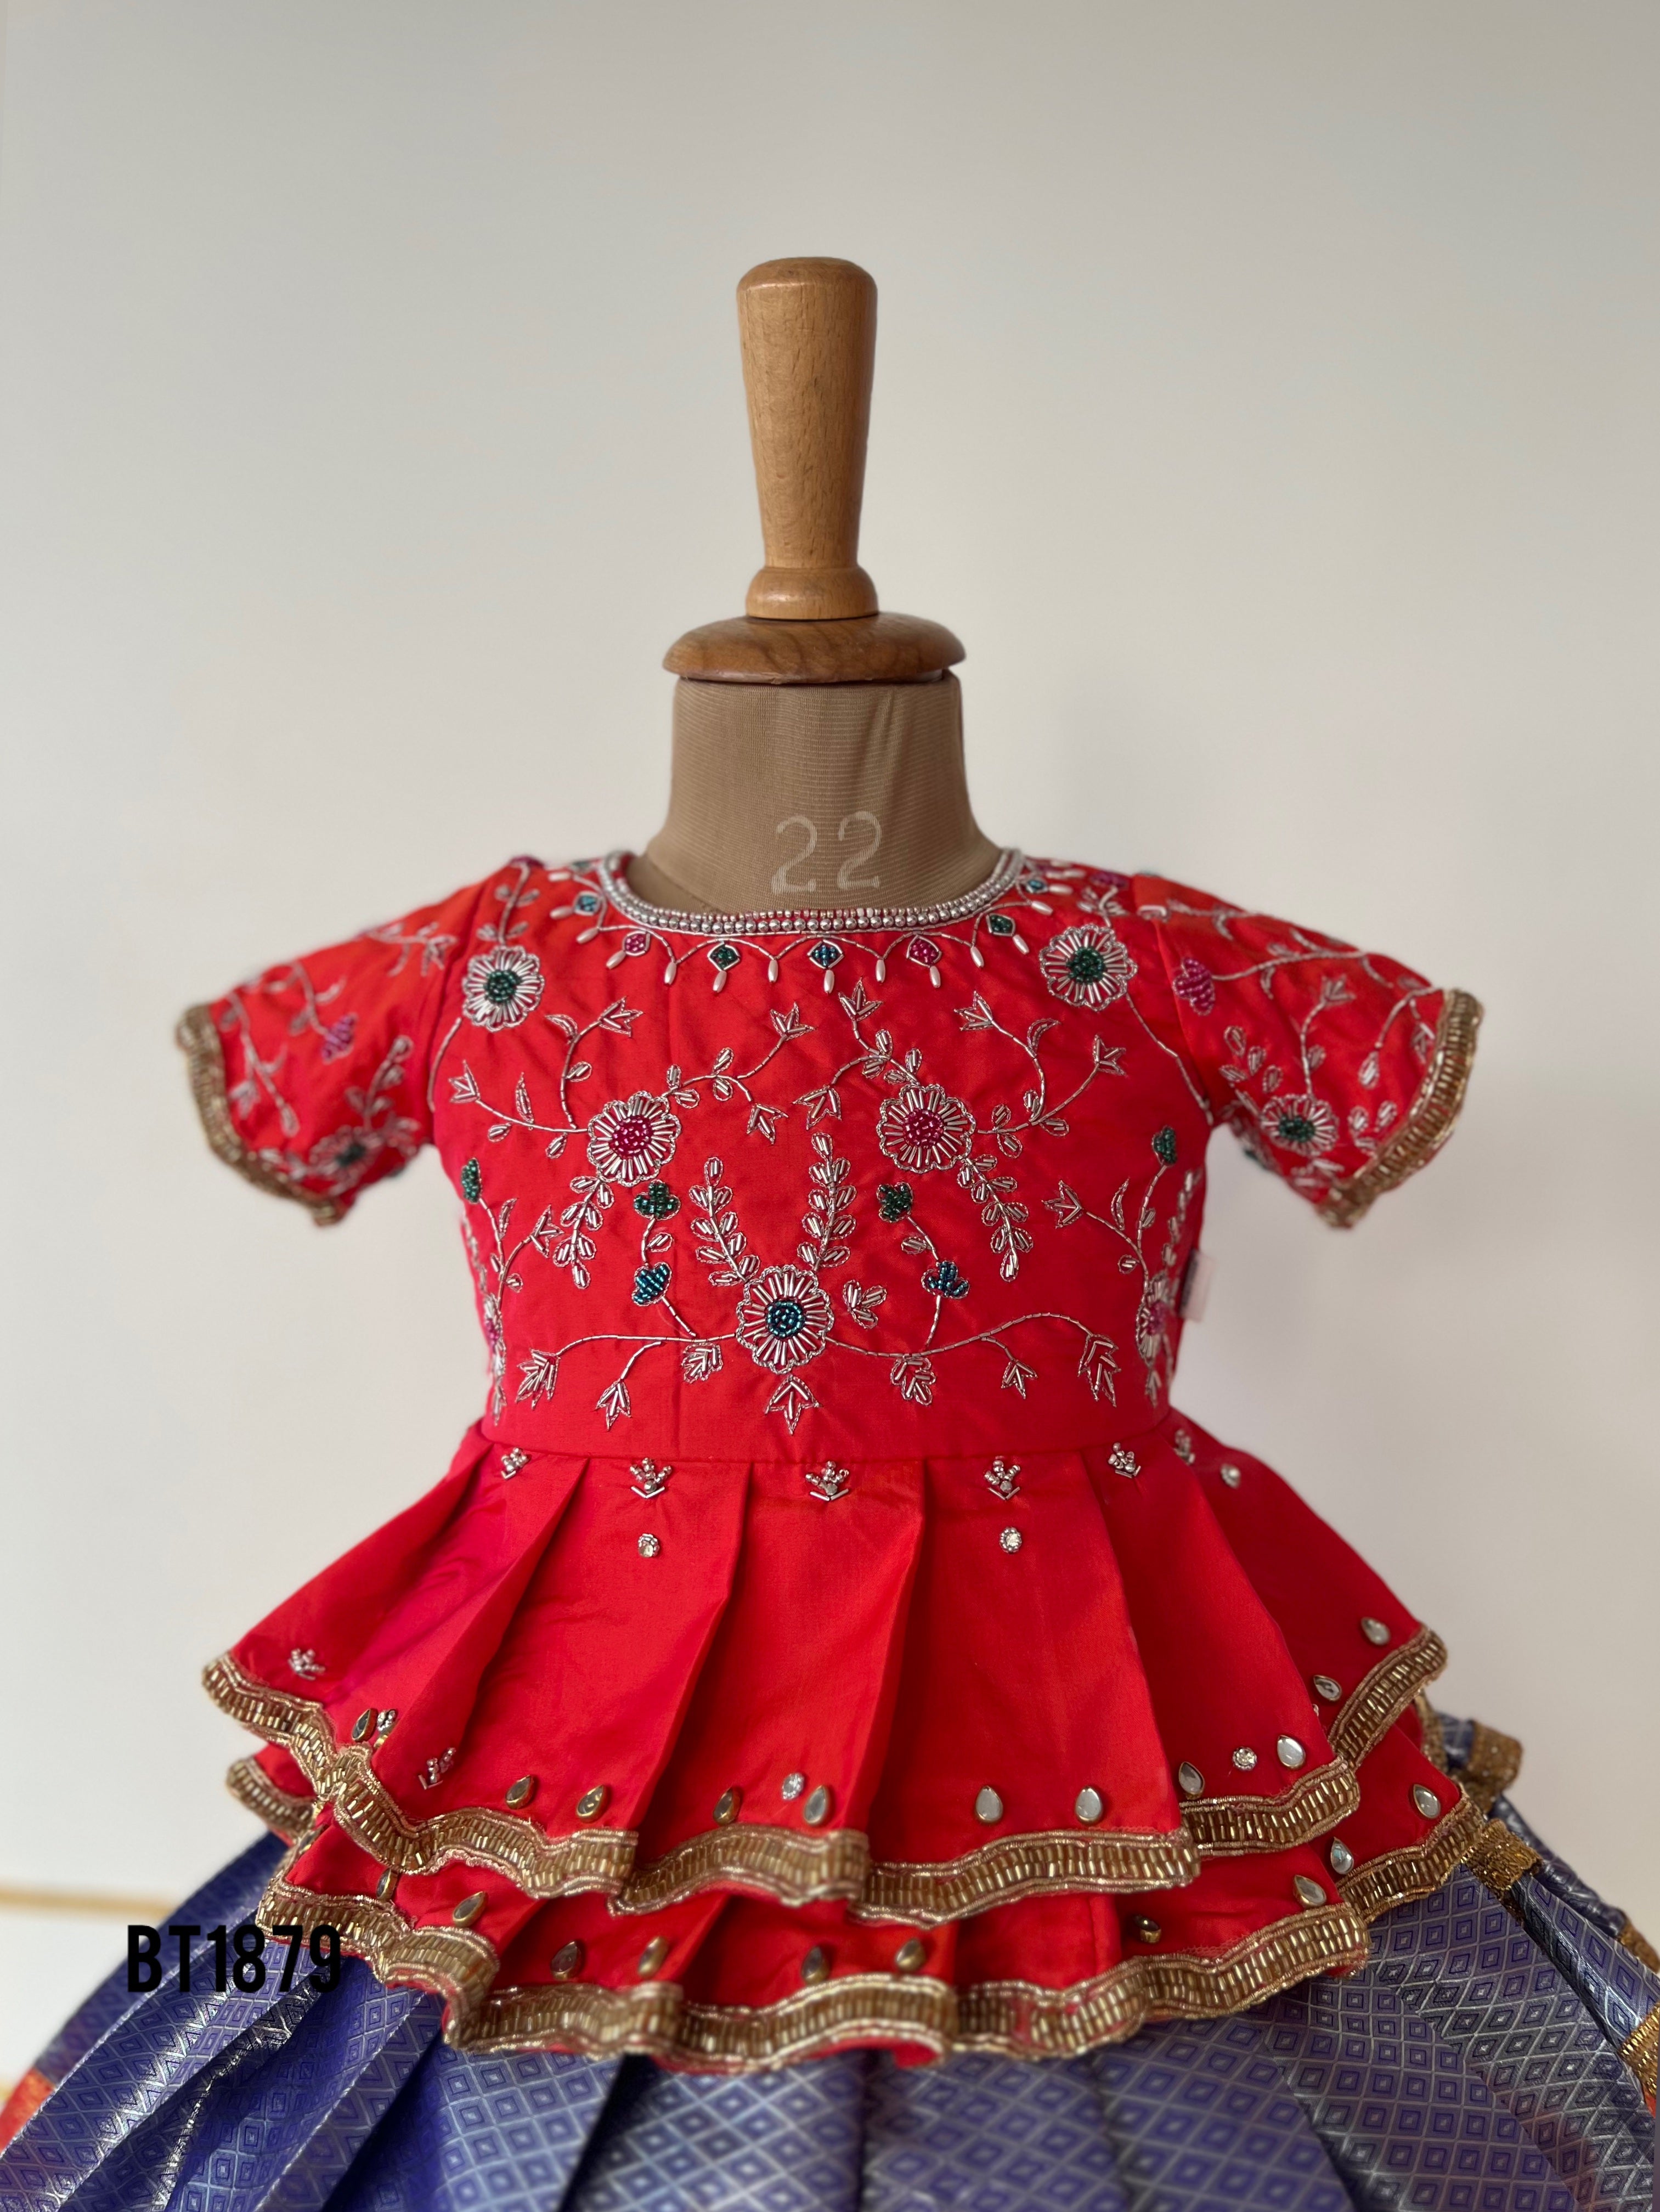 BT1879 Regal Radiance Pattu Lehanga - Baby’s Vibrant Festive Skirt Set